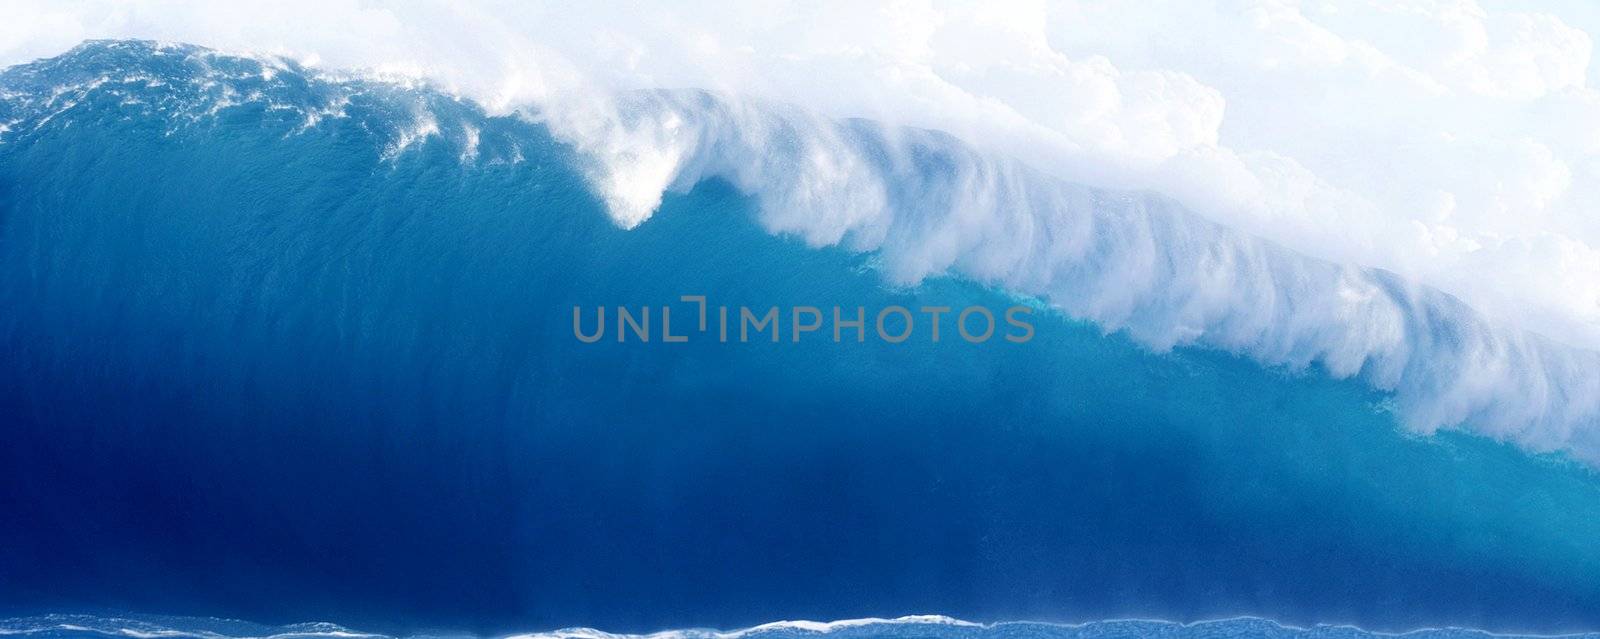 Large Blue Surfing Wave Breaks in the Ocean